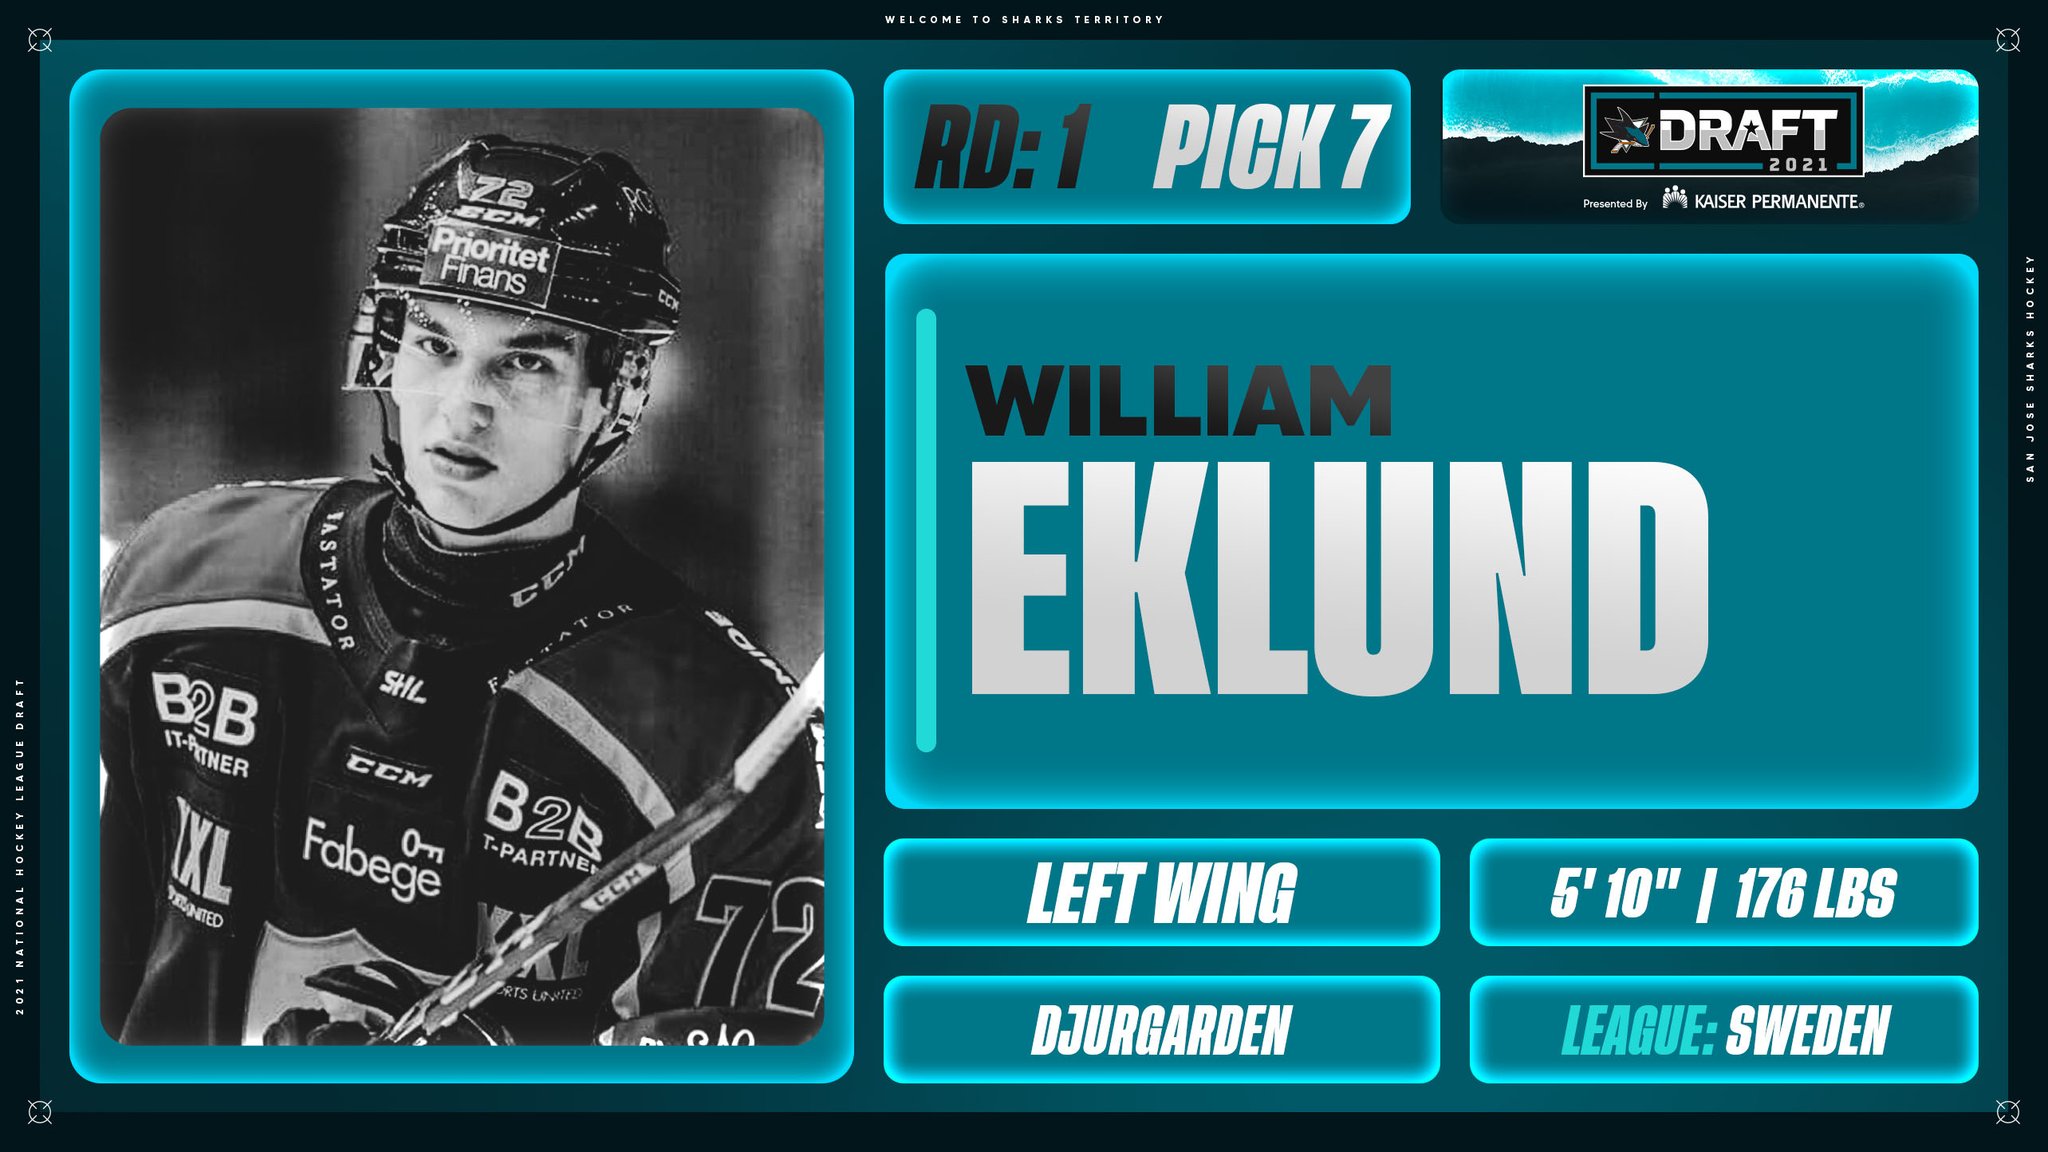 William Eklund San Jose Sharks #72 Teal Jersey 2021 NHL Draft